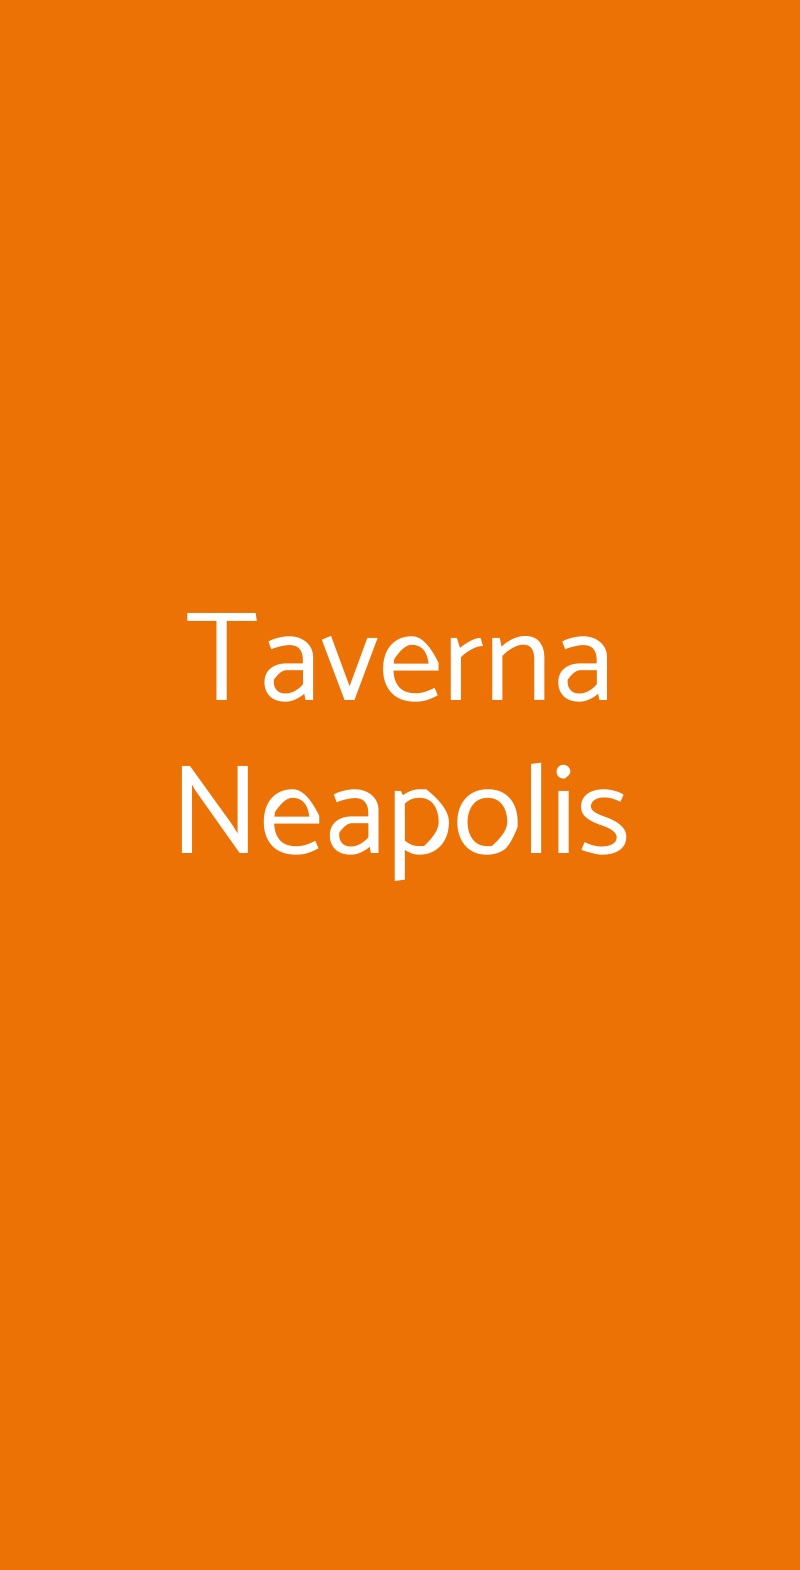 Taverna Neapolis Marano di Napoli menù 1 pagina